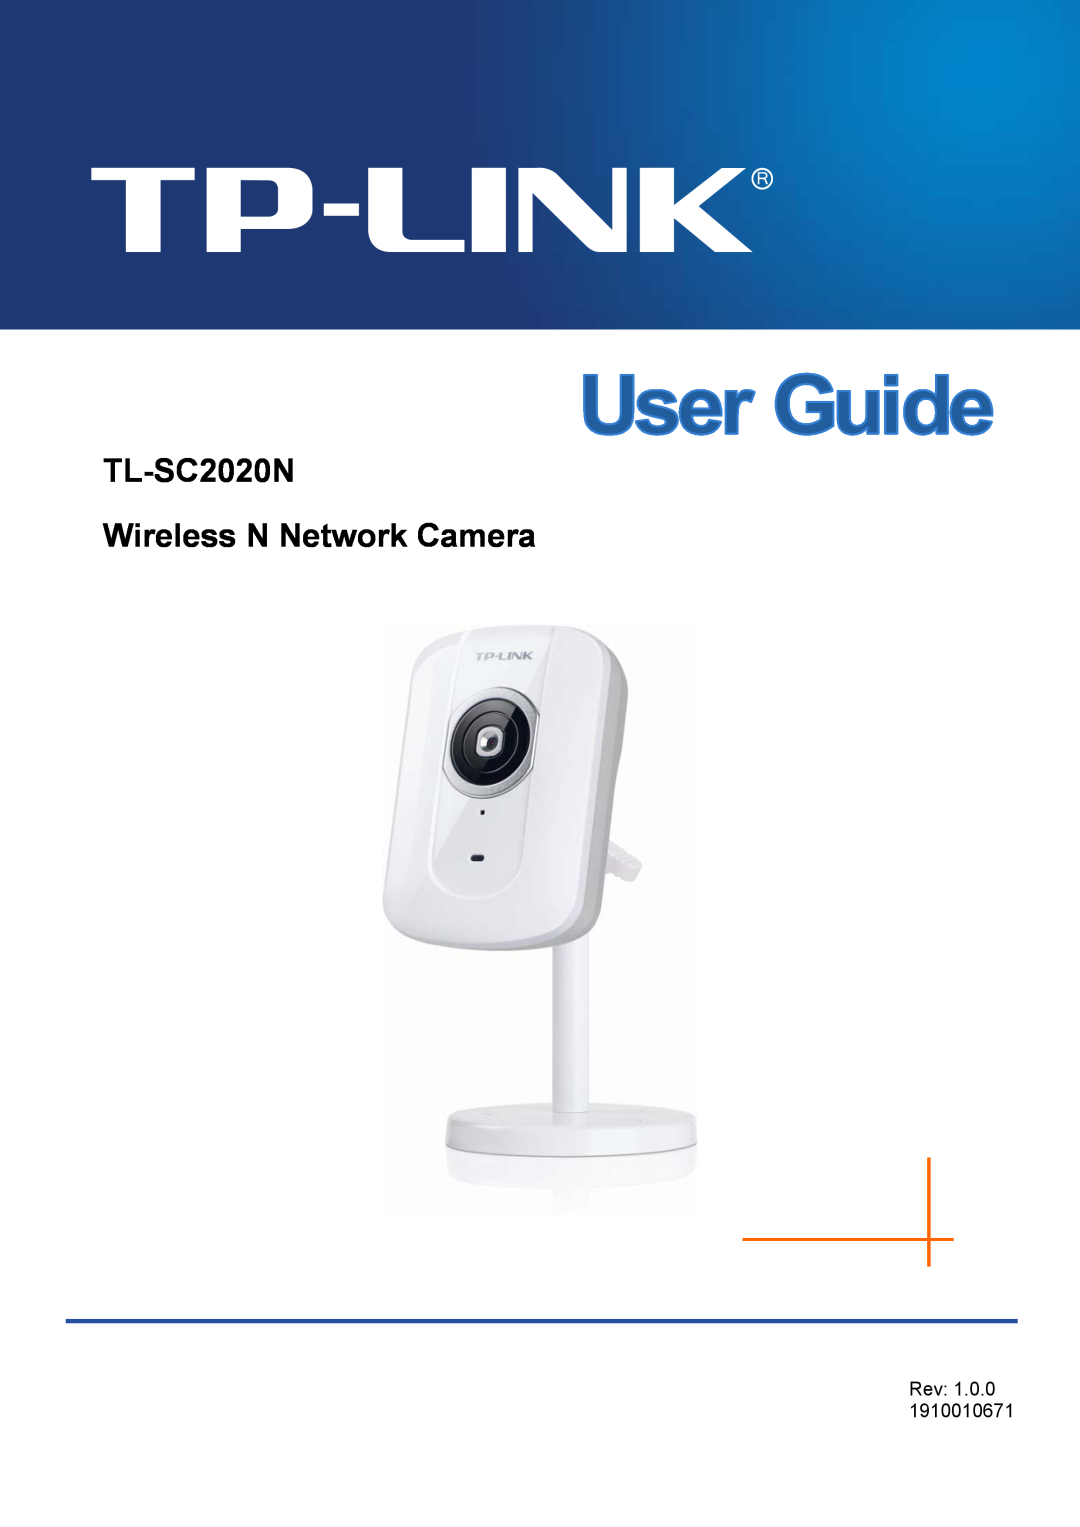 TP-Link manual TL-SC2020N Wireless N Network Camera, Rev: 1.0.0 